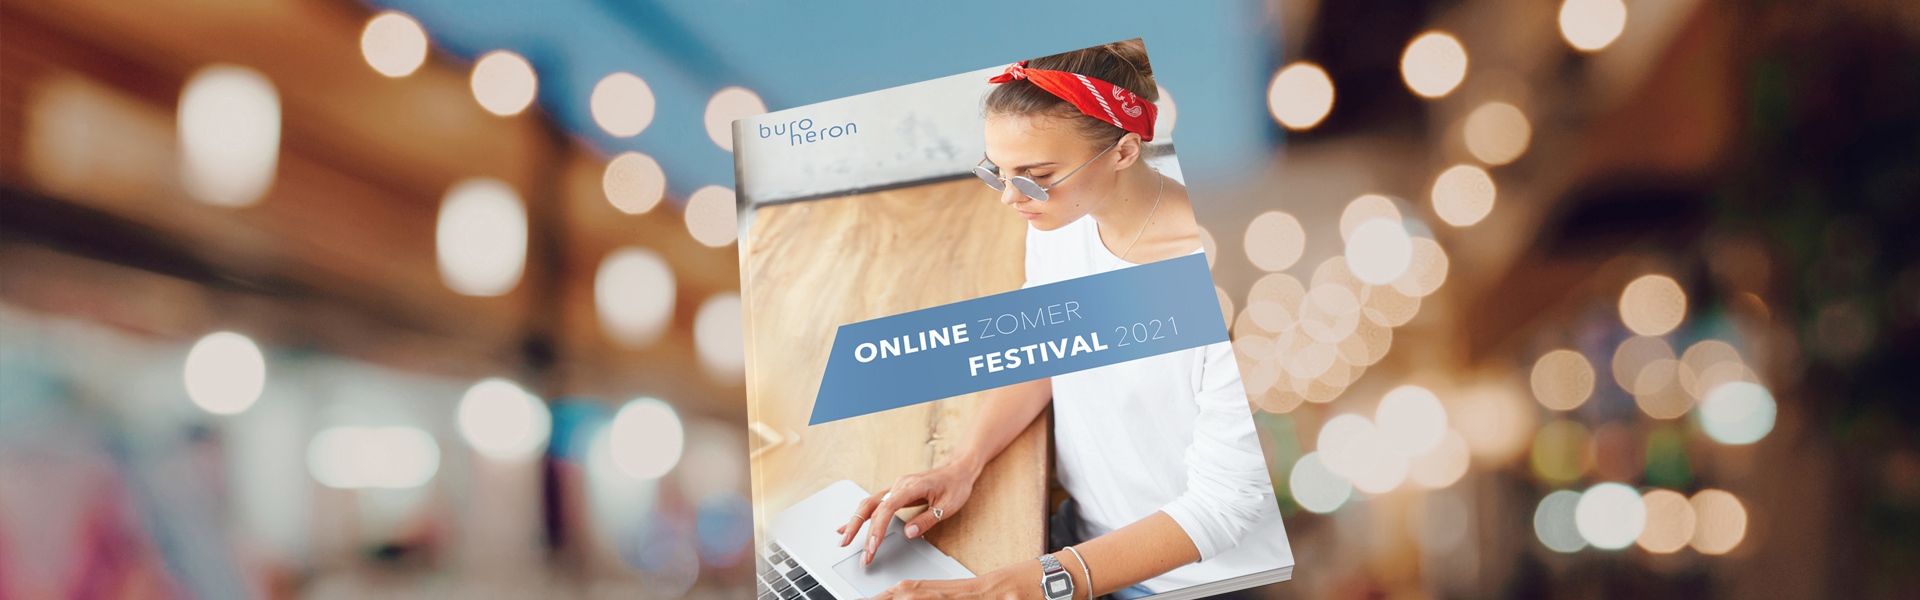 Header gids online zomerfestival 2021